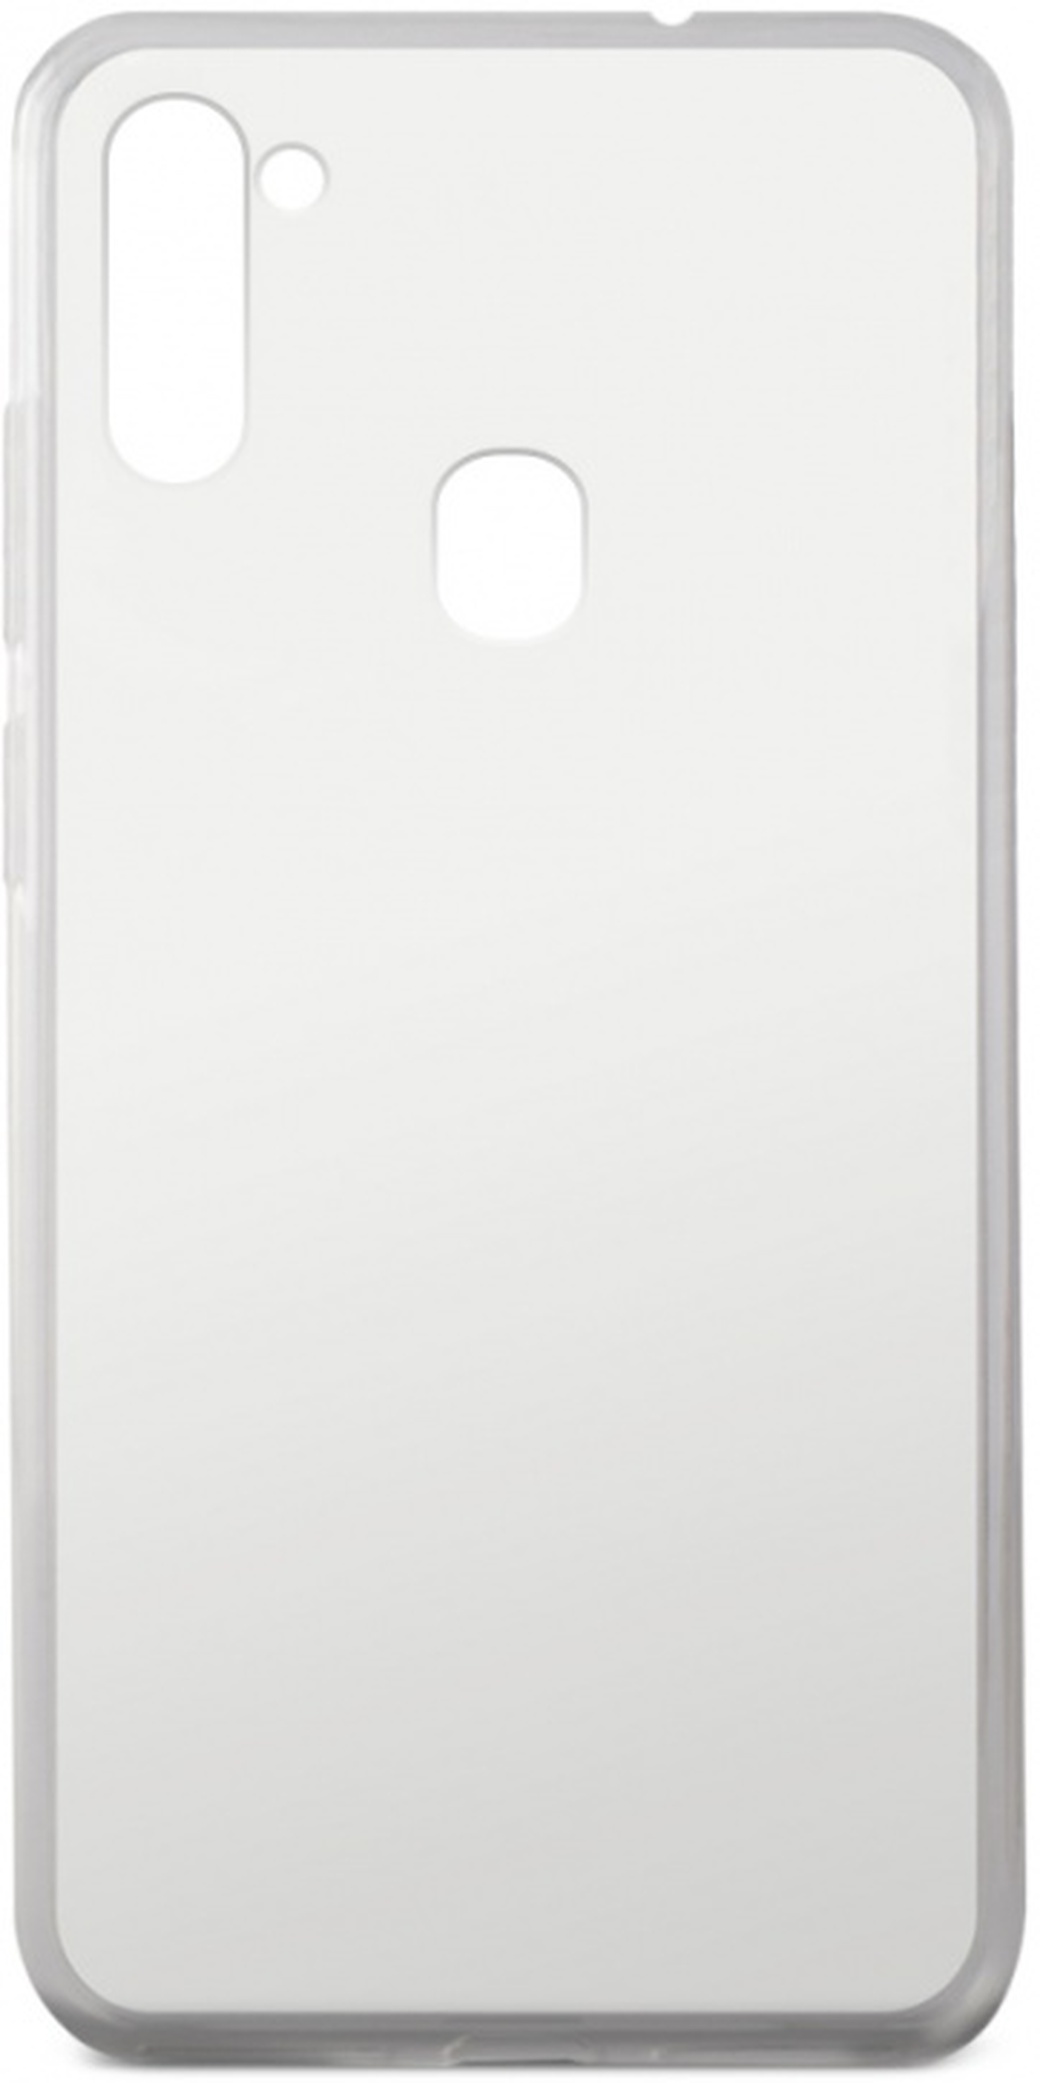 Чехол для смартфона Samsung Galaxy M11 Silicone iBox Crystal (прозрачный), Redline фото